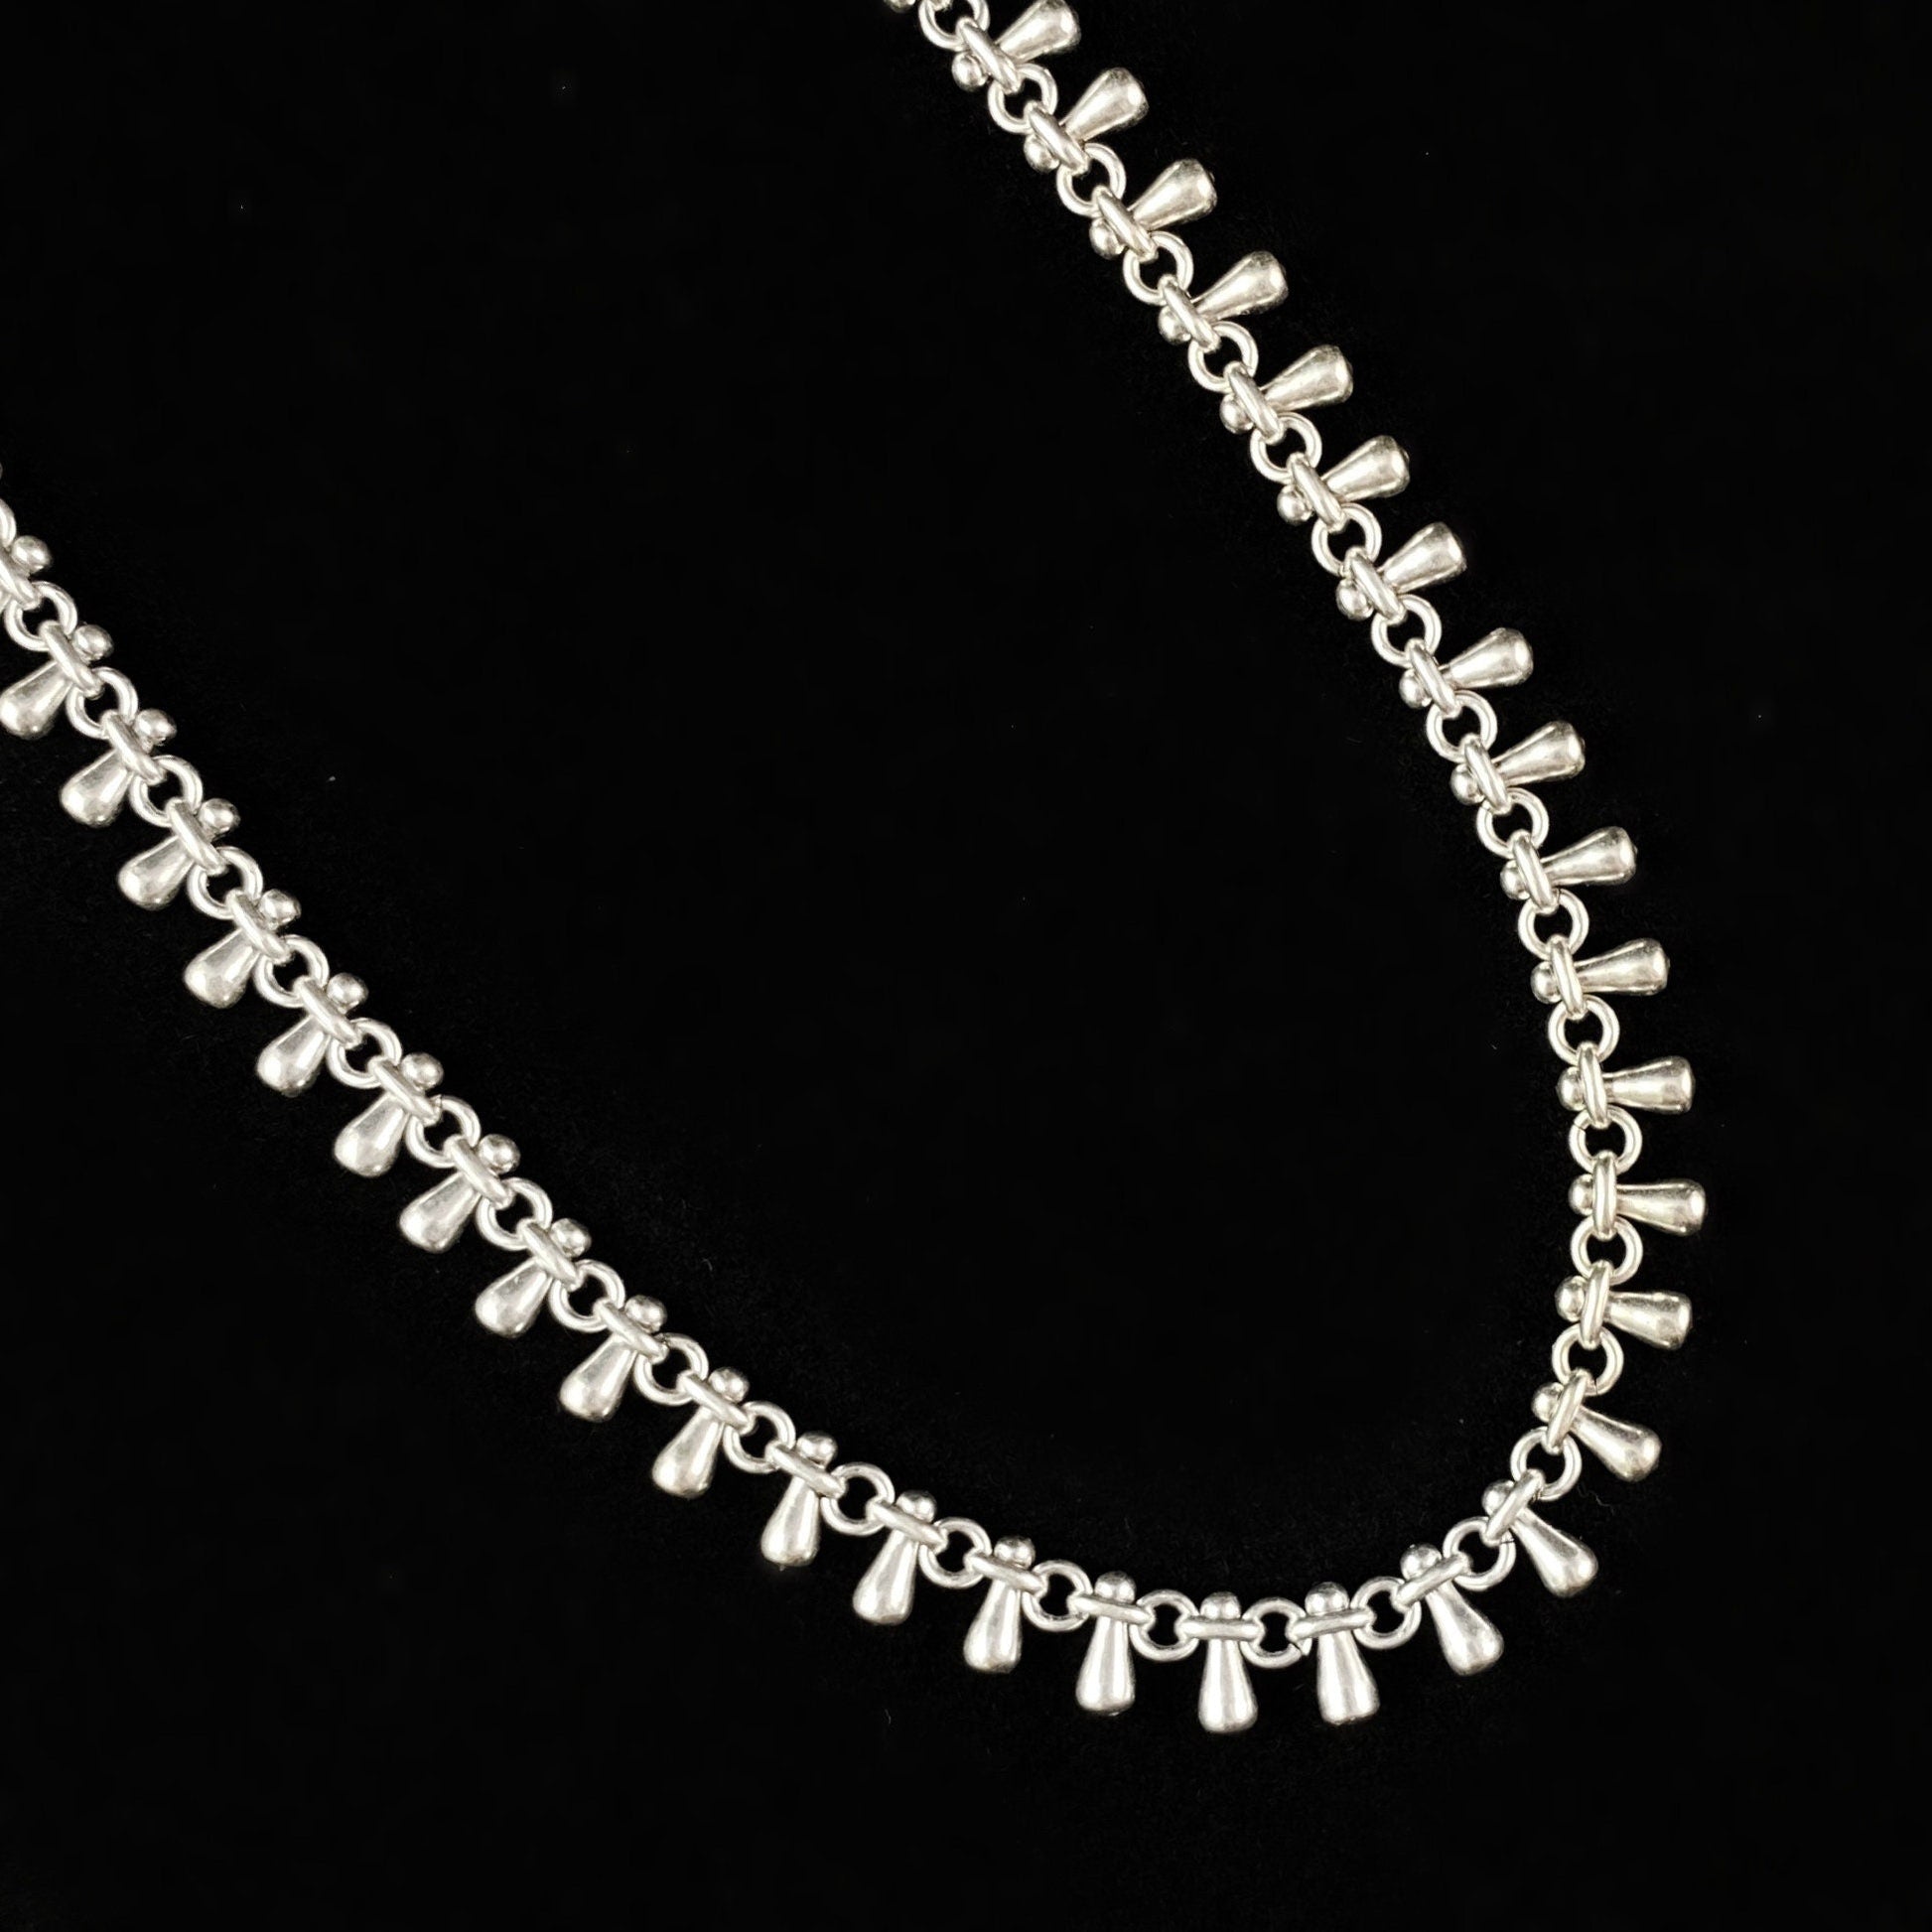 Silver Fringe Chain Statement Necklace - La Vie Parisienne by Catherine Popesco